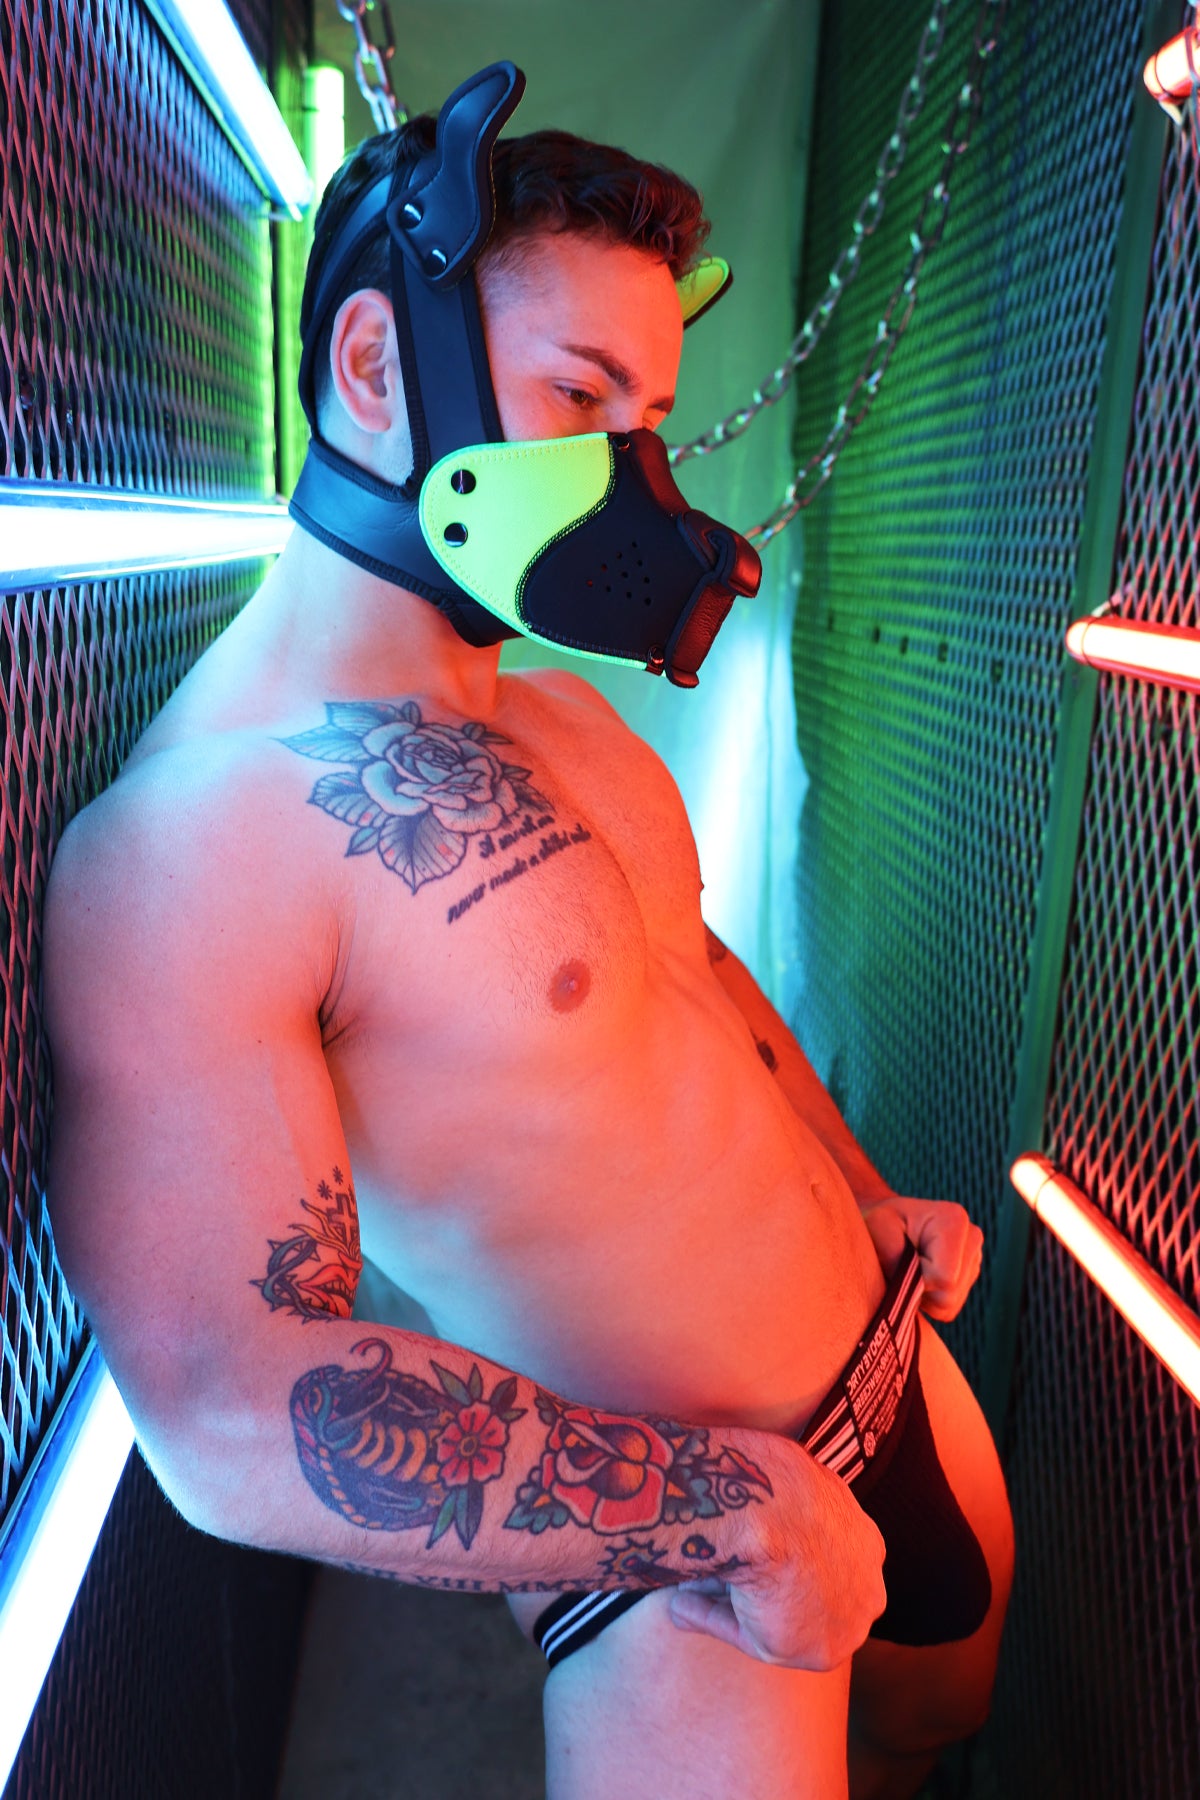 Poundtown Pup Mask 2.0 - Neon Green